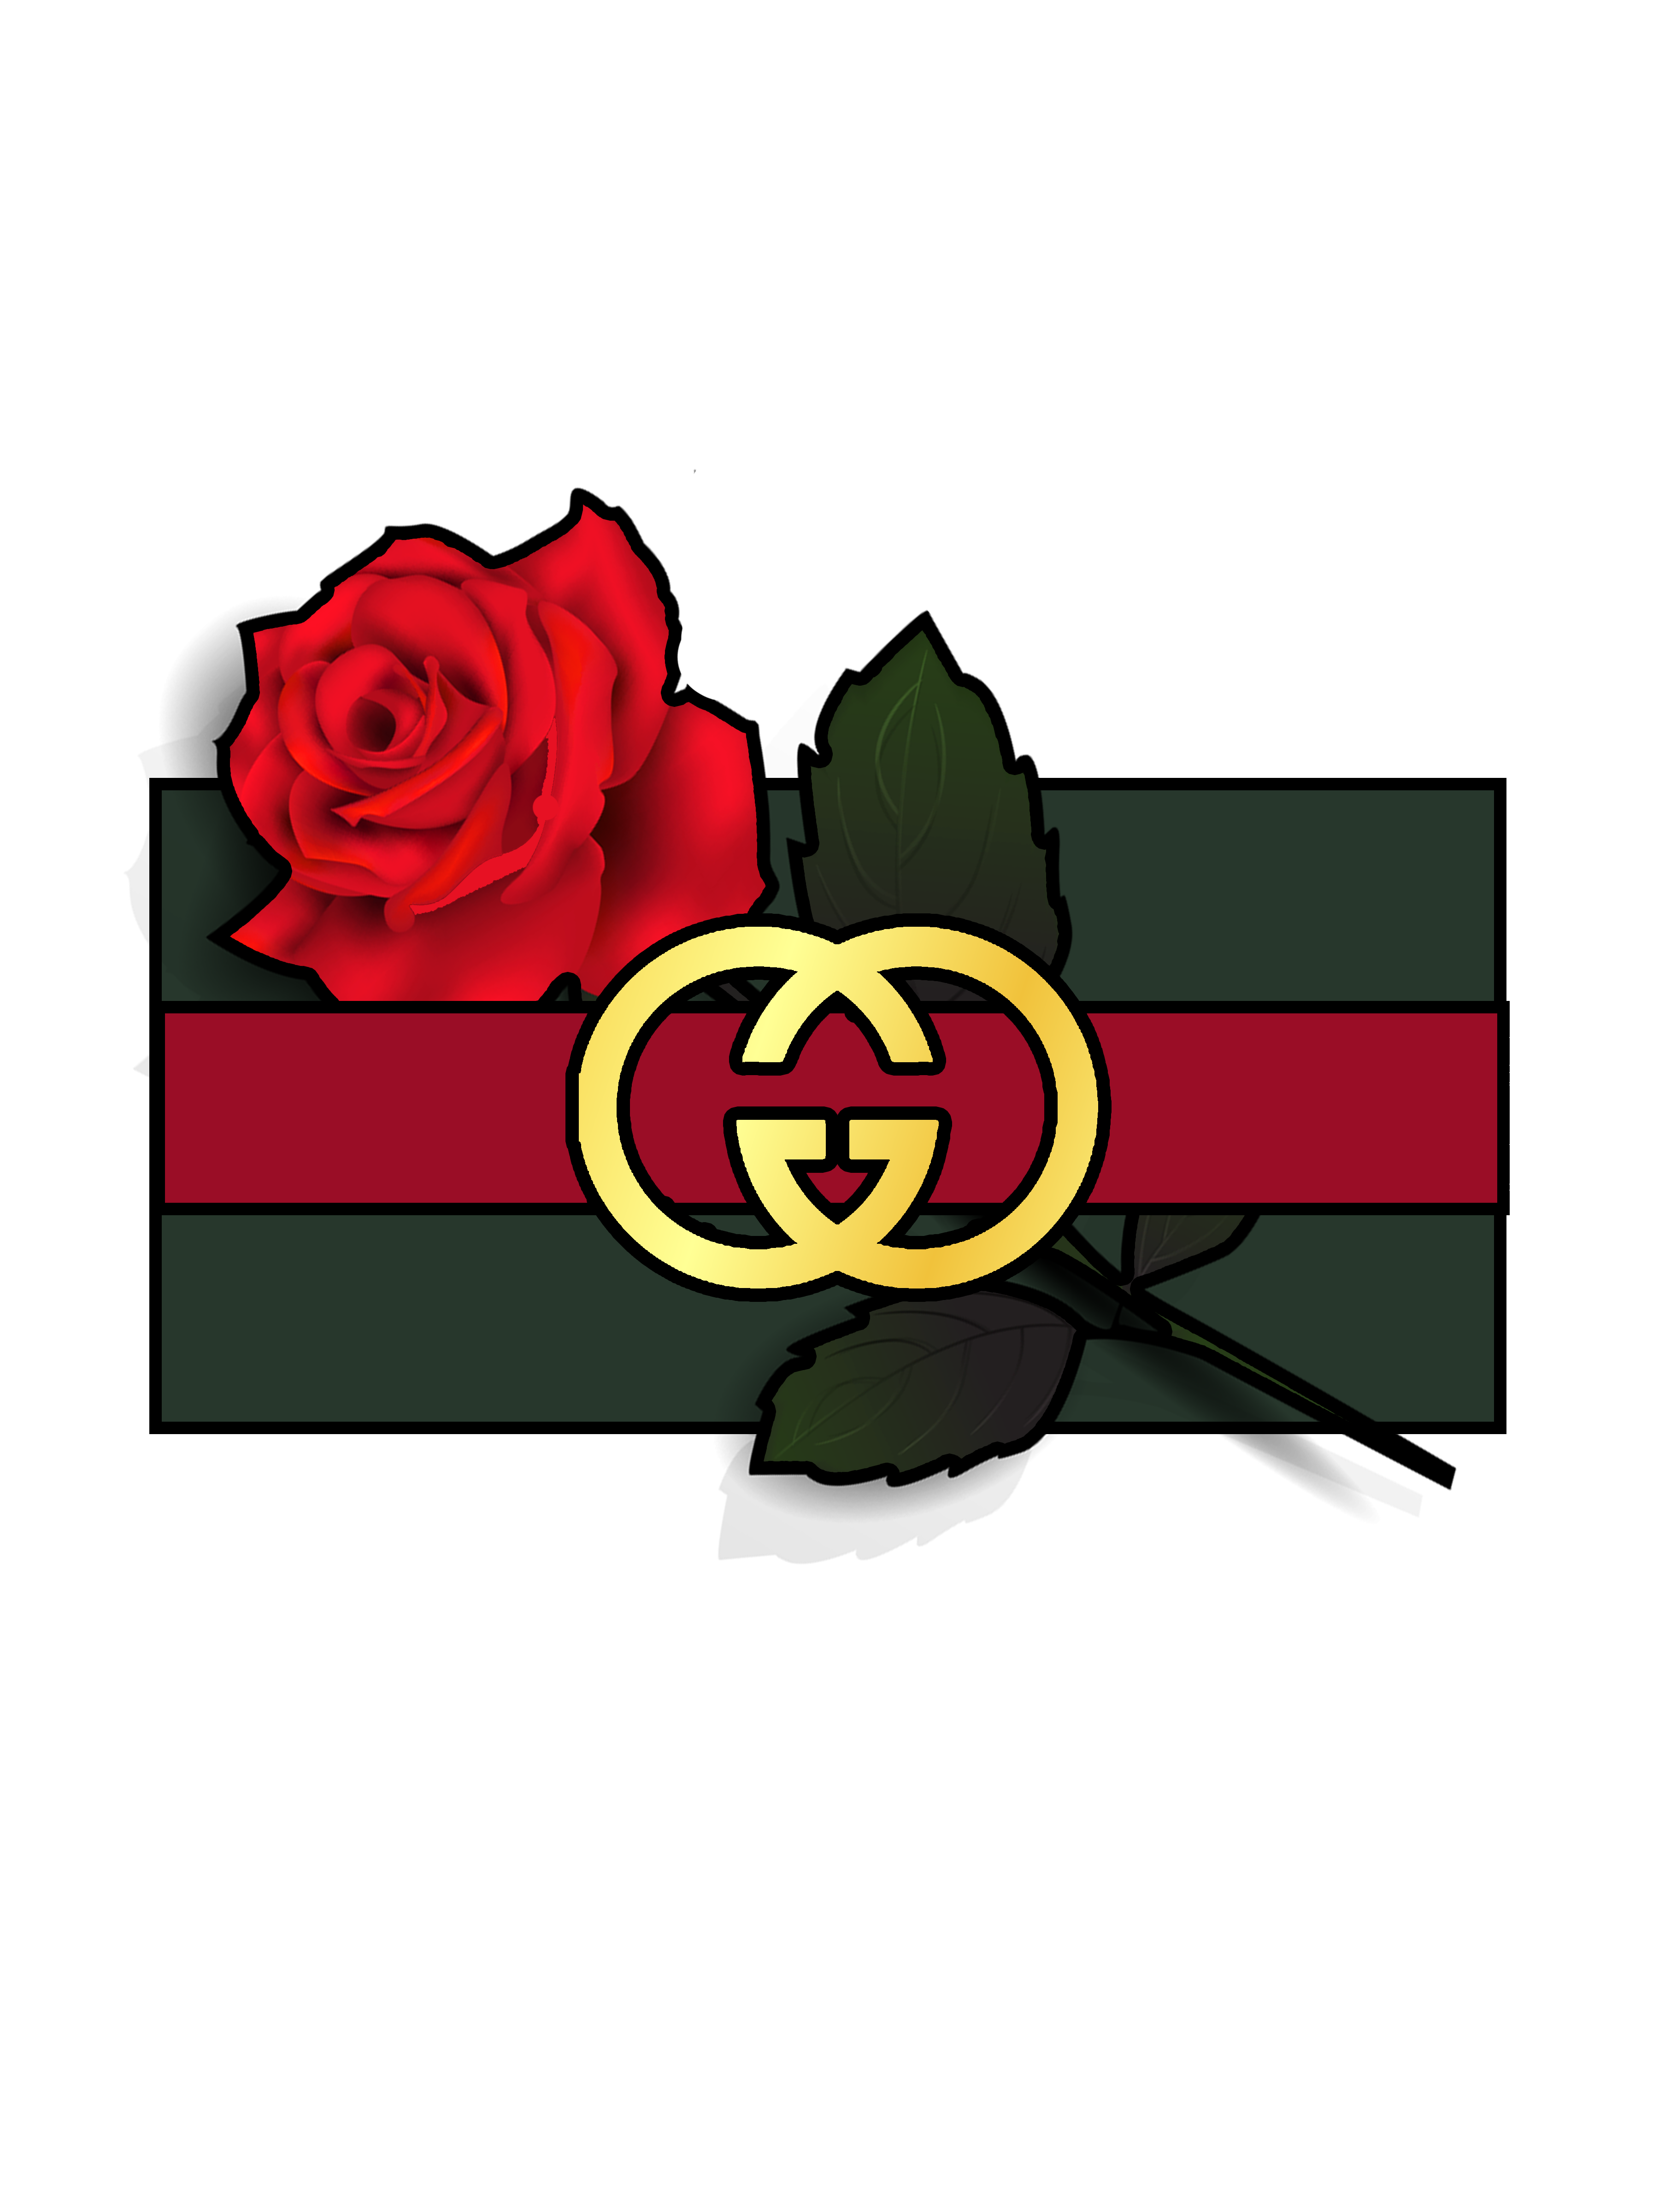 Gucci Logo PNG Unduh Gratis